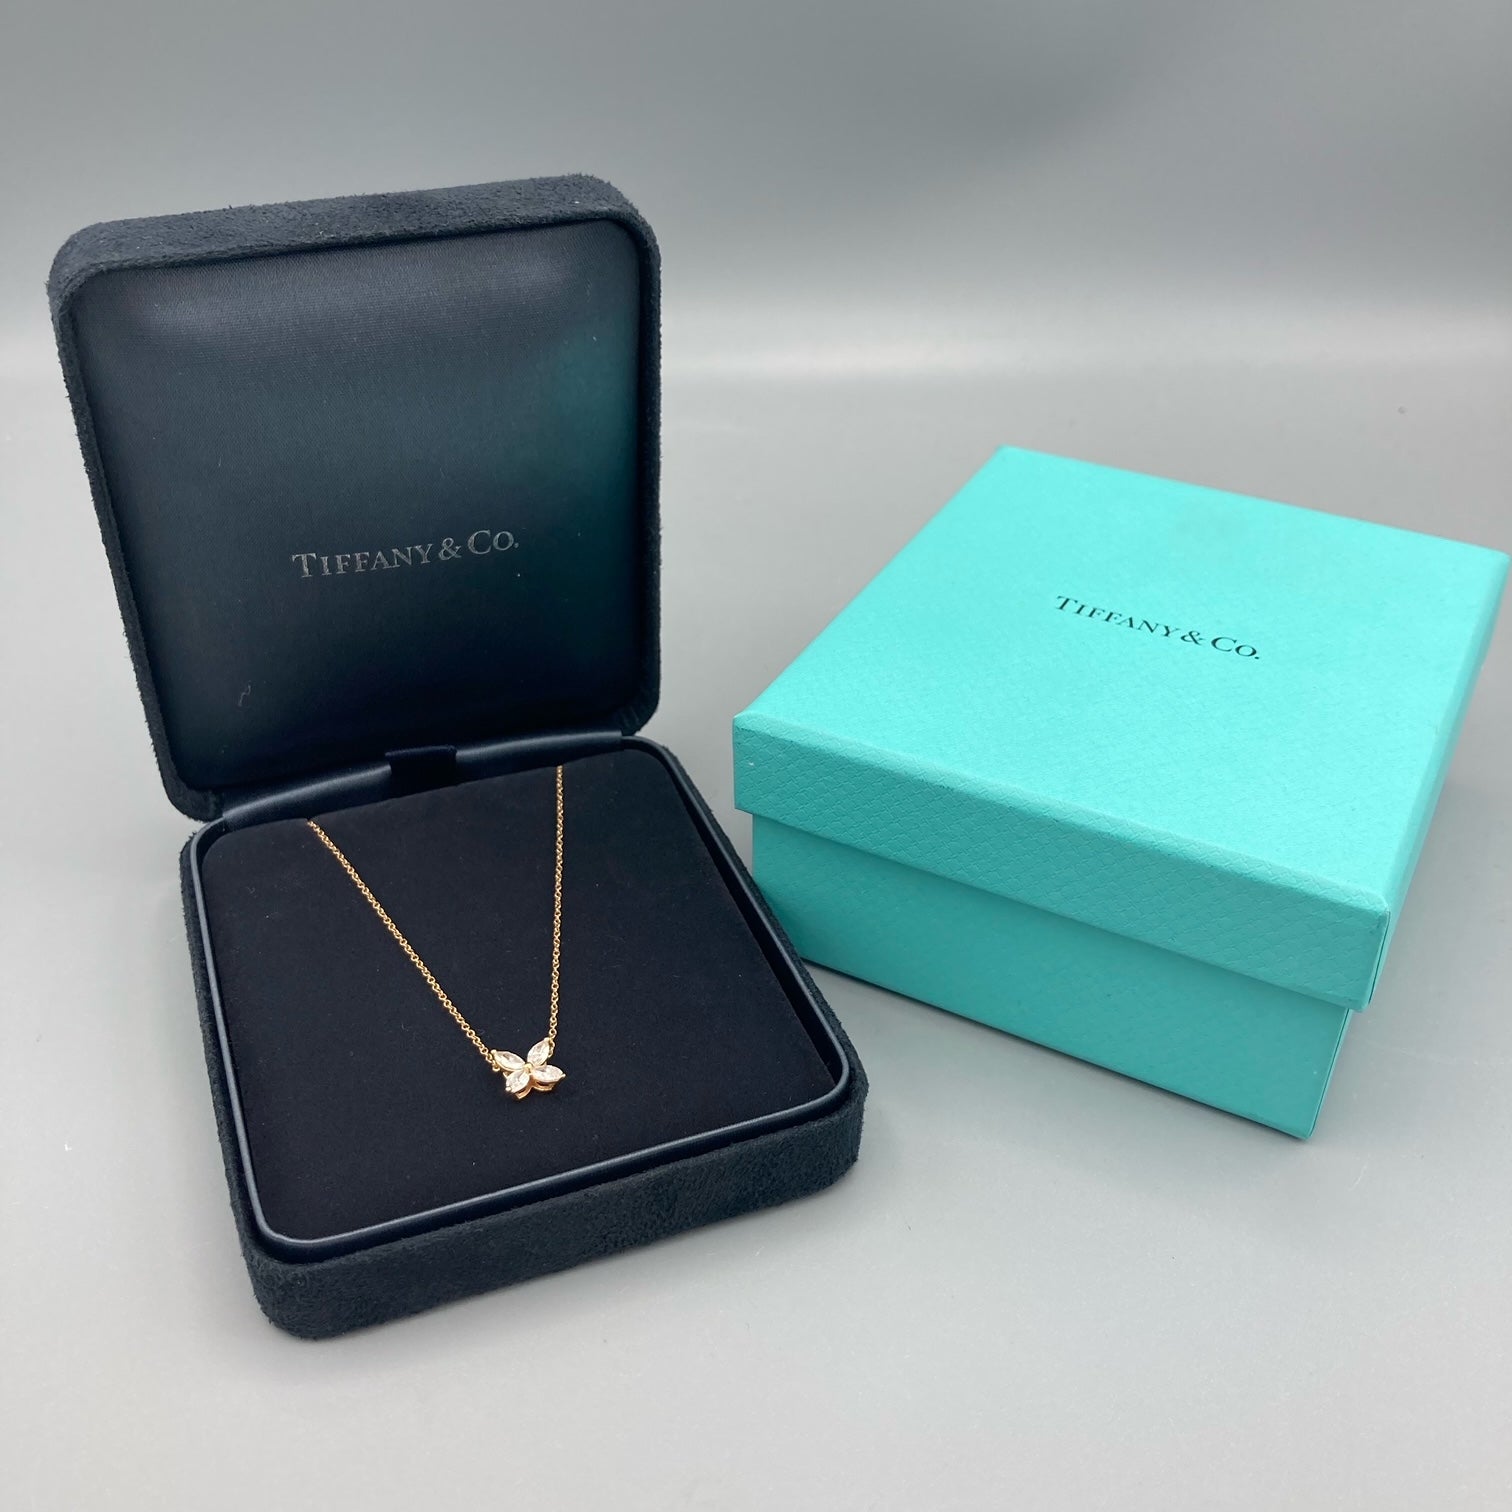 Tiffany & Co. Collier Pendentif Victoria en or rose 18 carats avec diamants Taille moyen